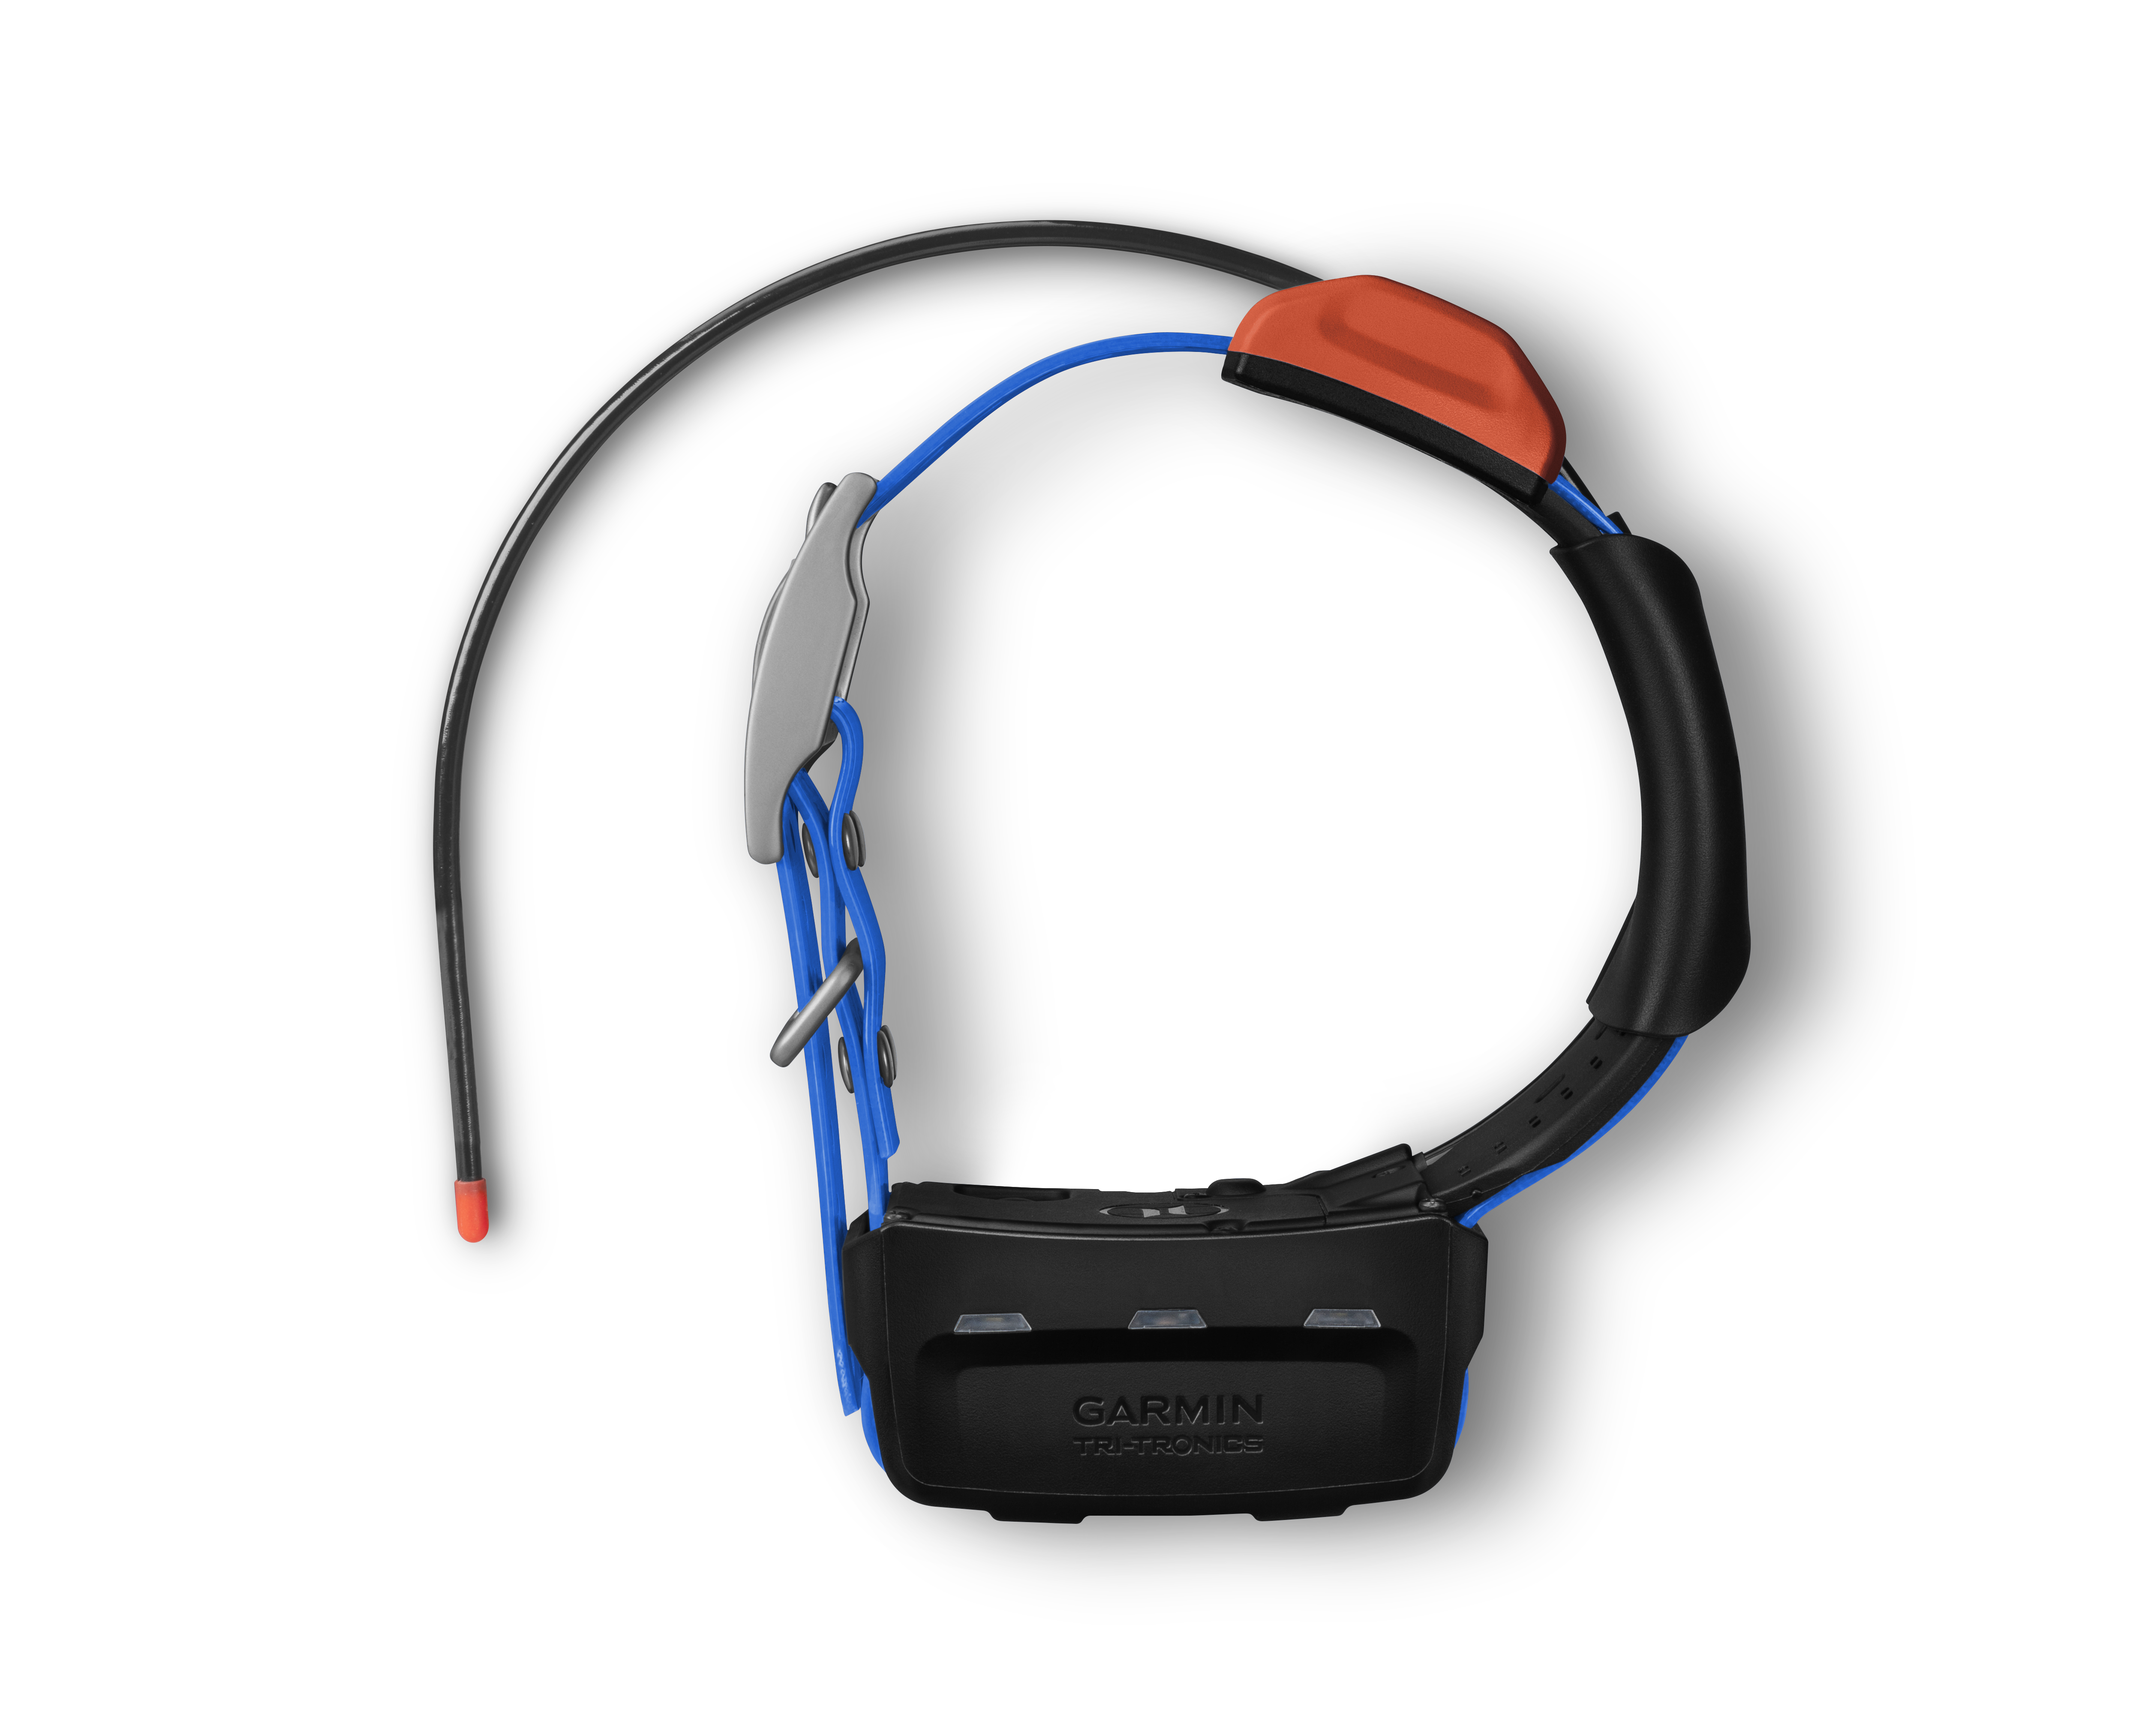 Garmin T5X GPS Dog Tracking Collar